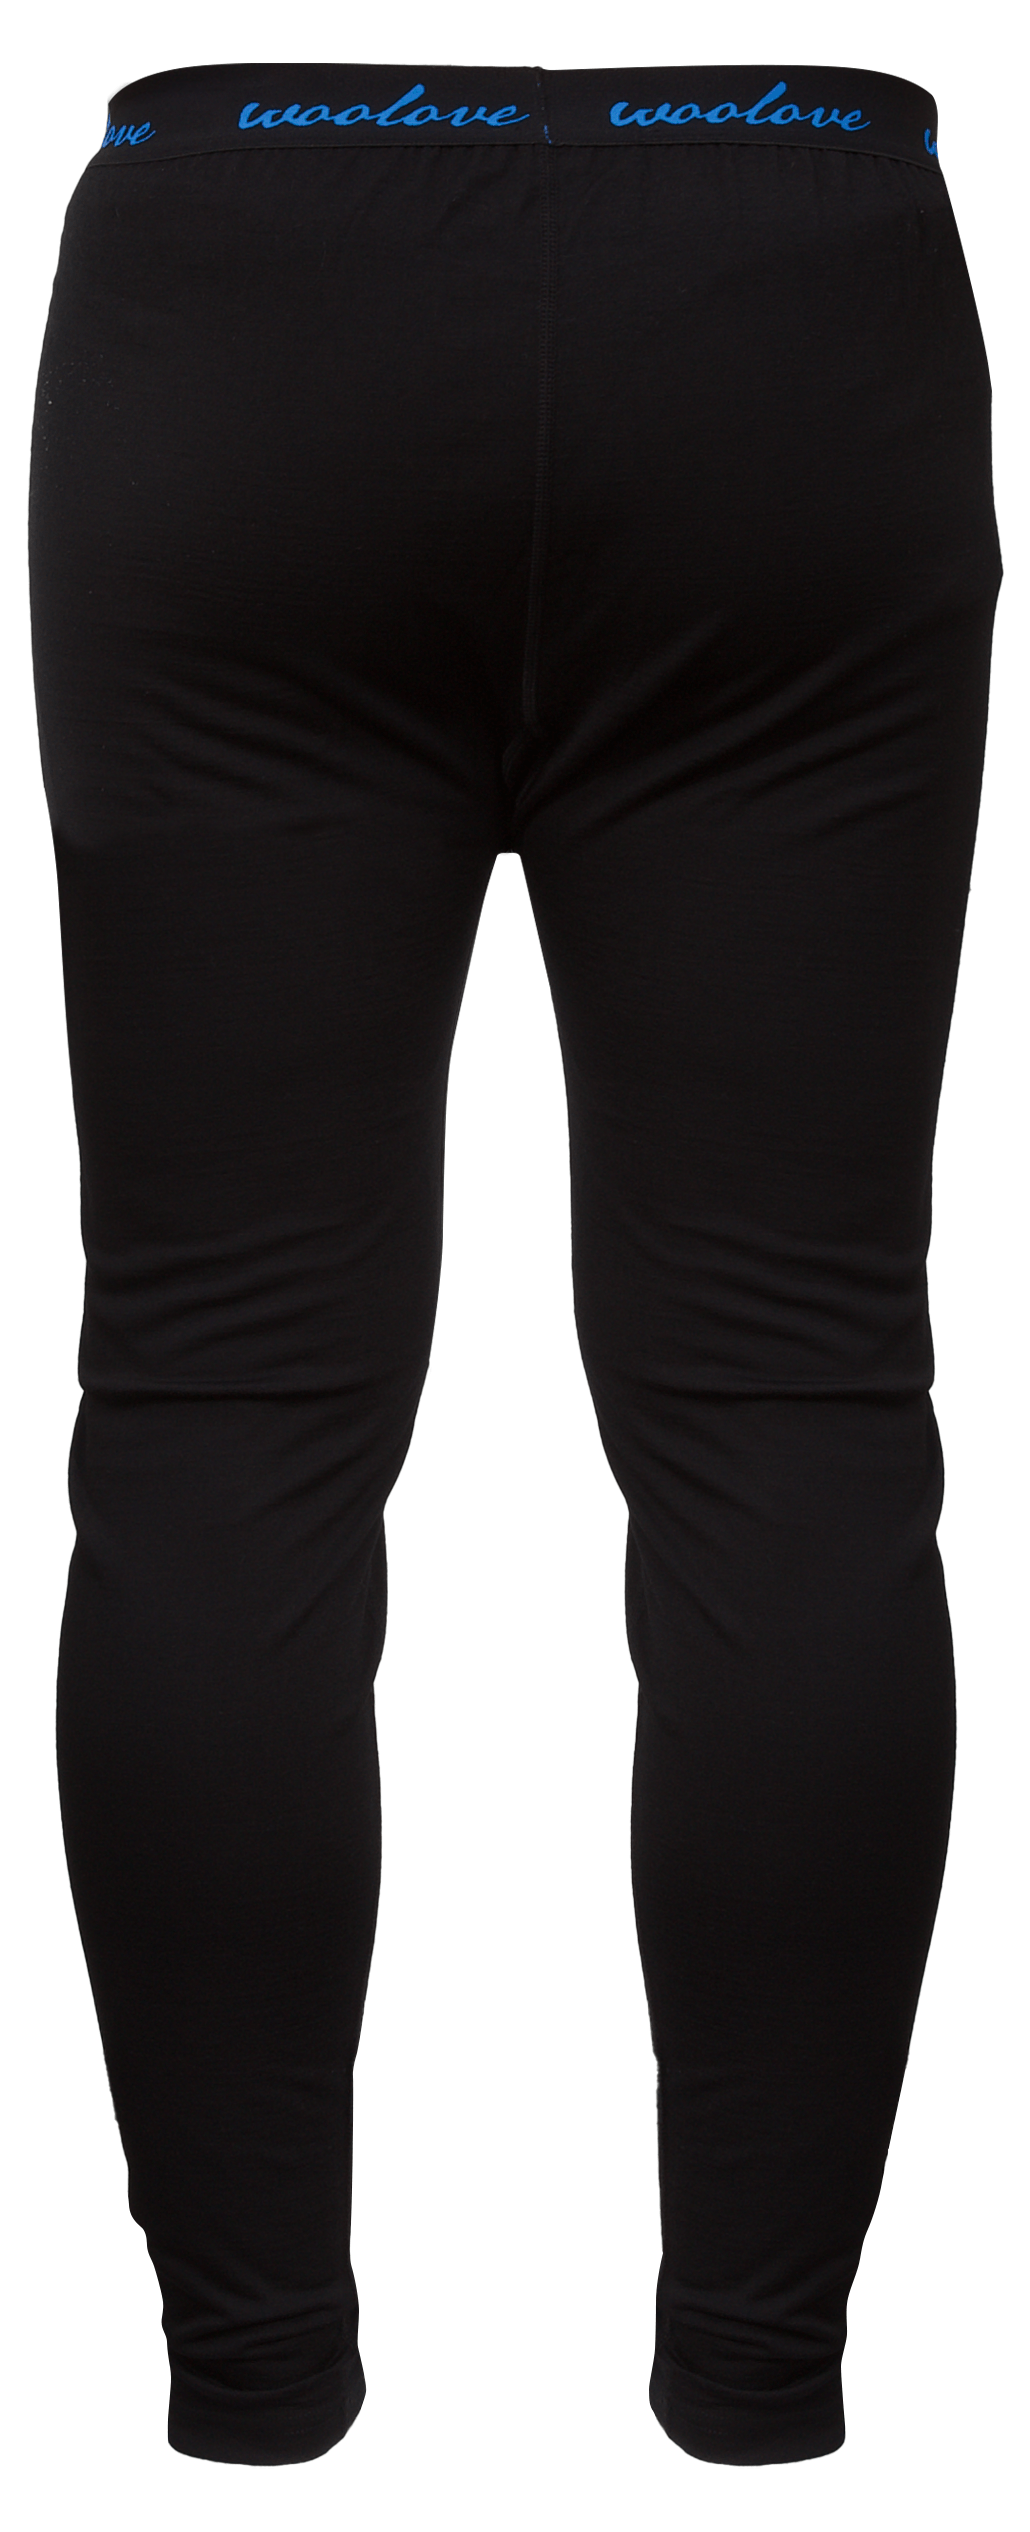 100% Merino Wool Base Layer Pants Mens Thermal Underwear Bottom